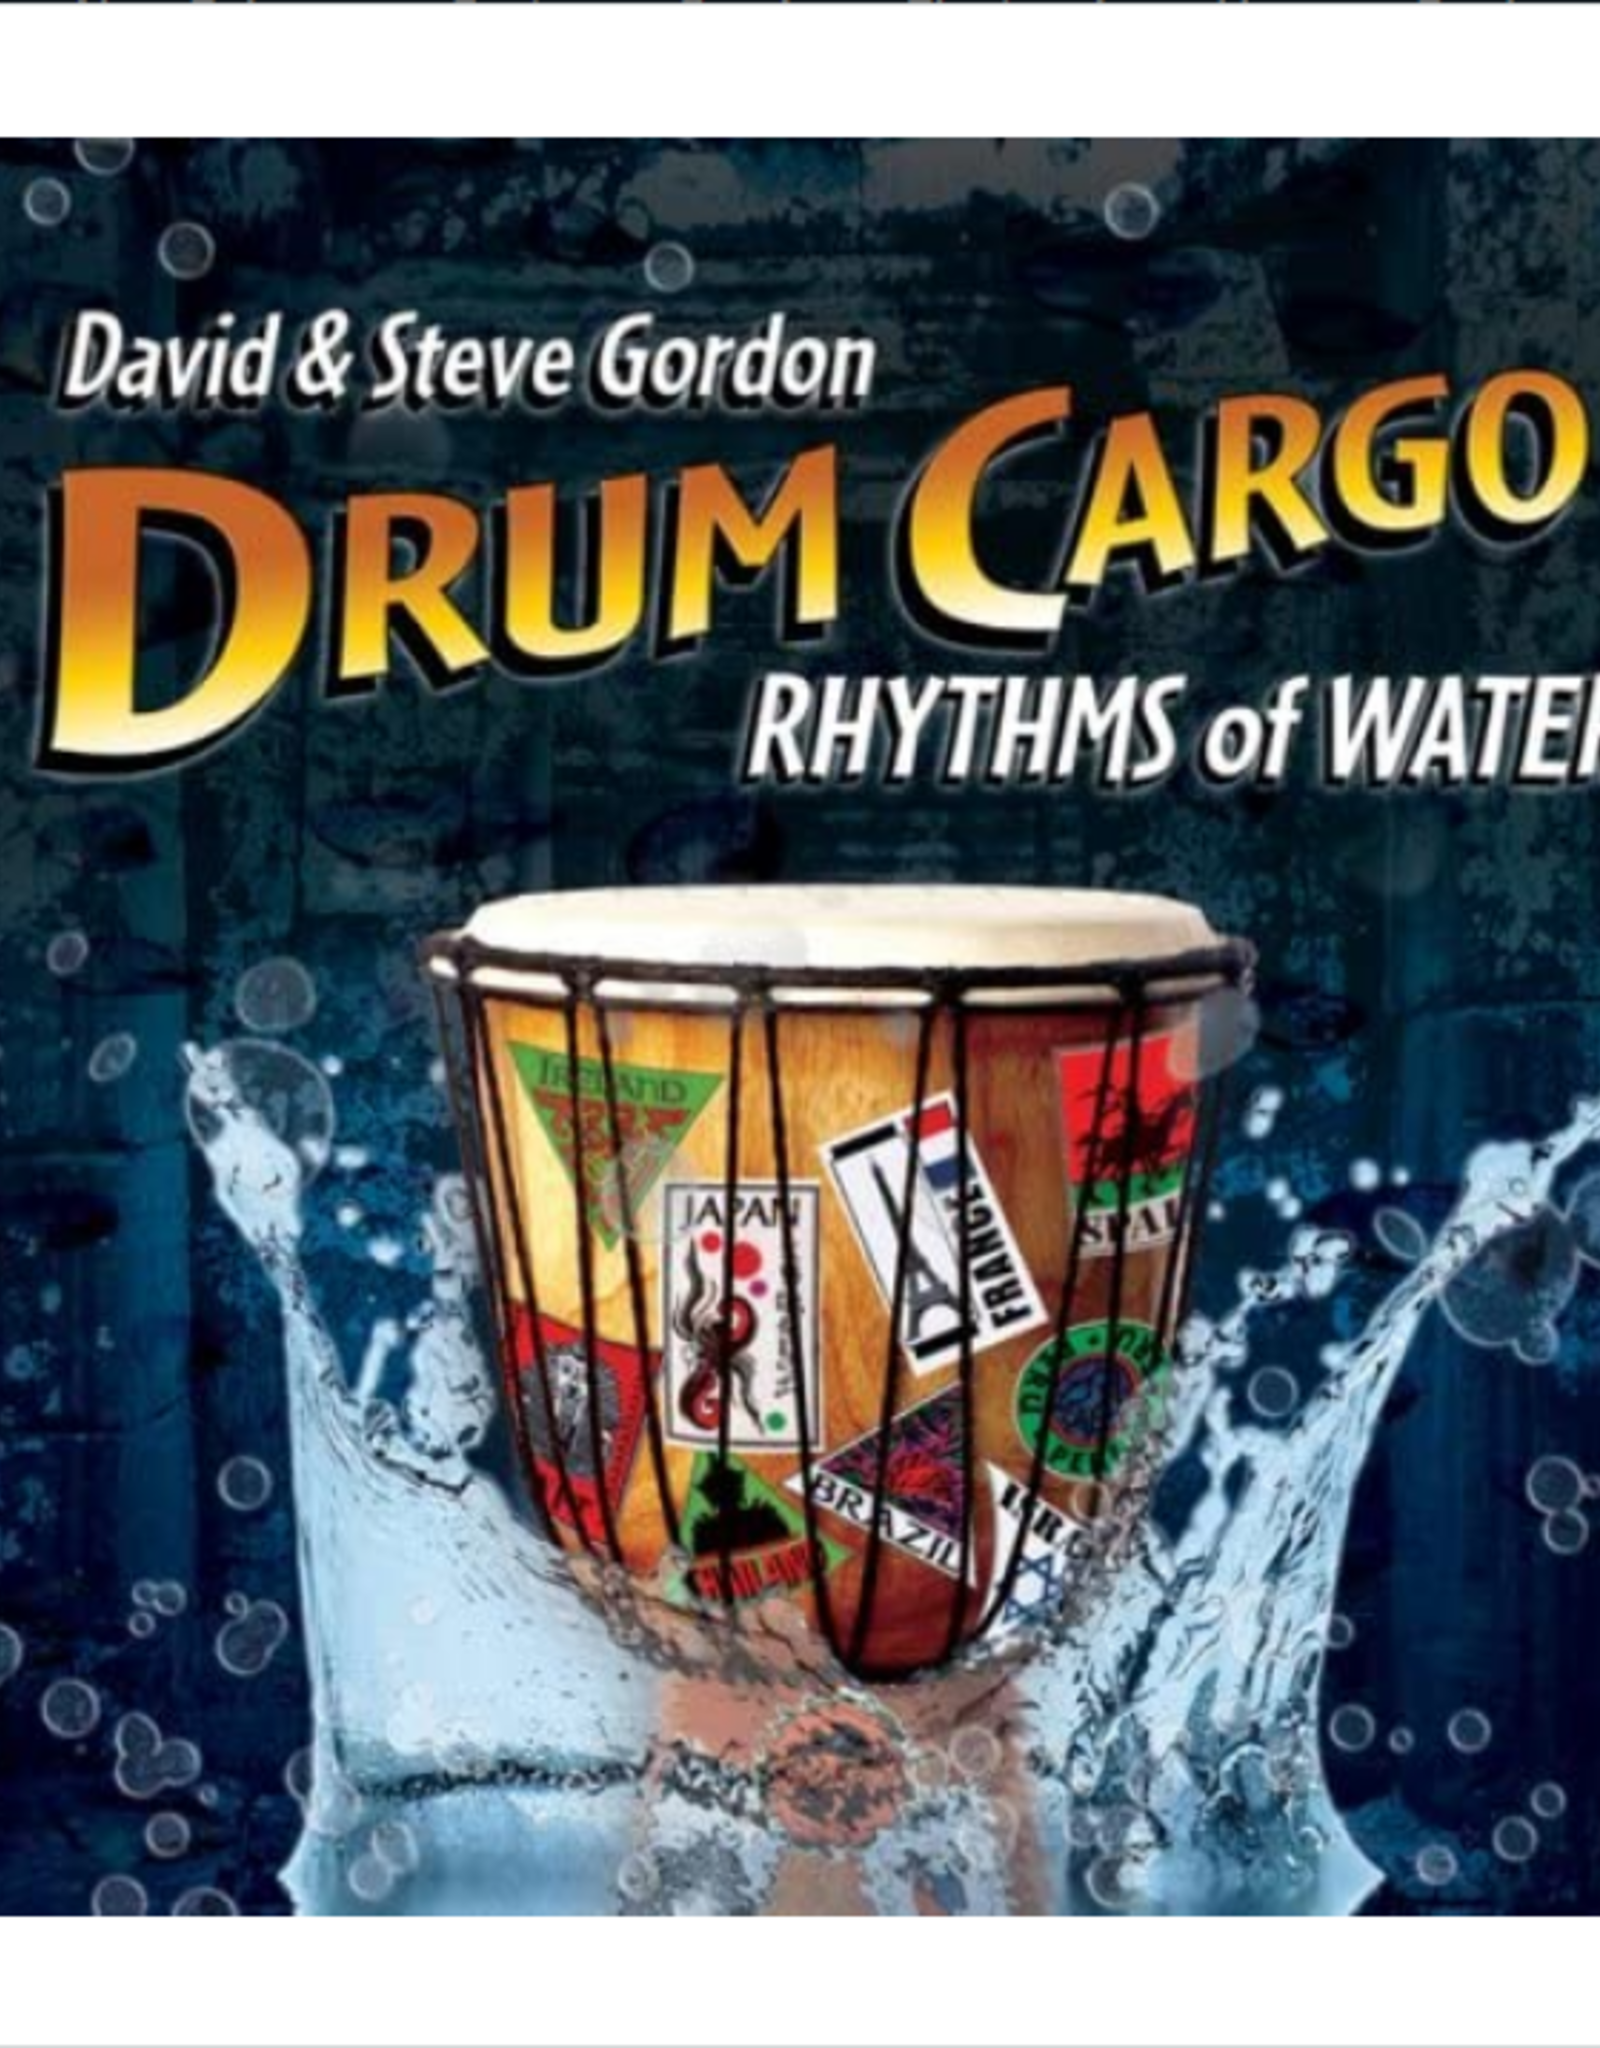 David Gordon Drum Cargo Rhythms of Water CD by David & Steve Gordon